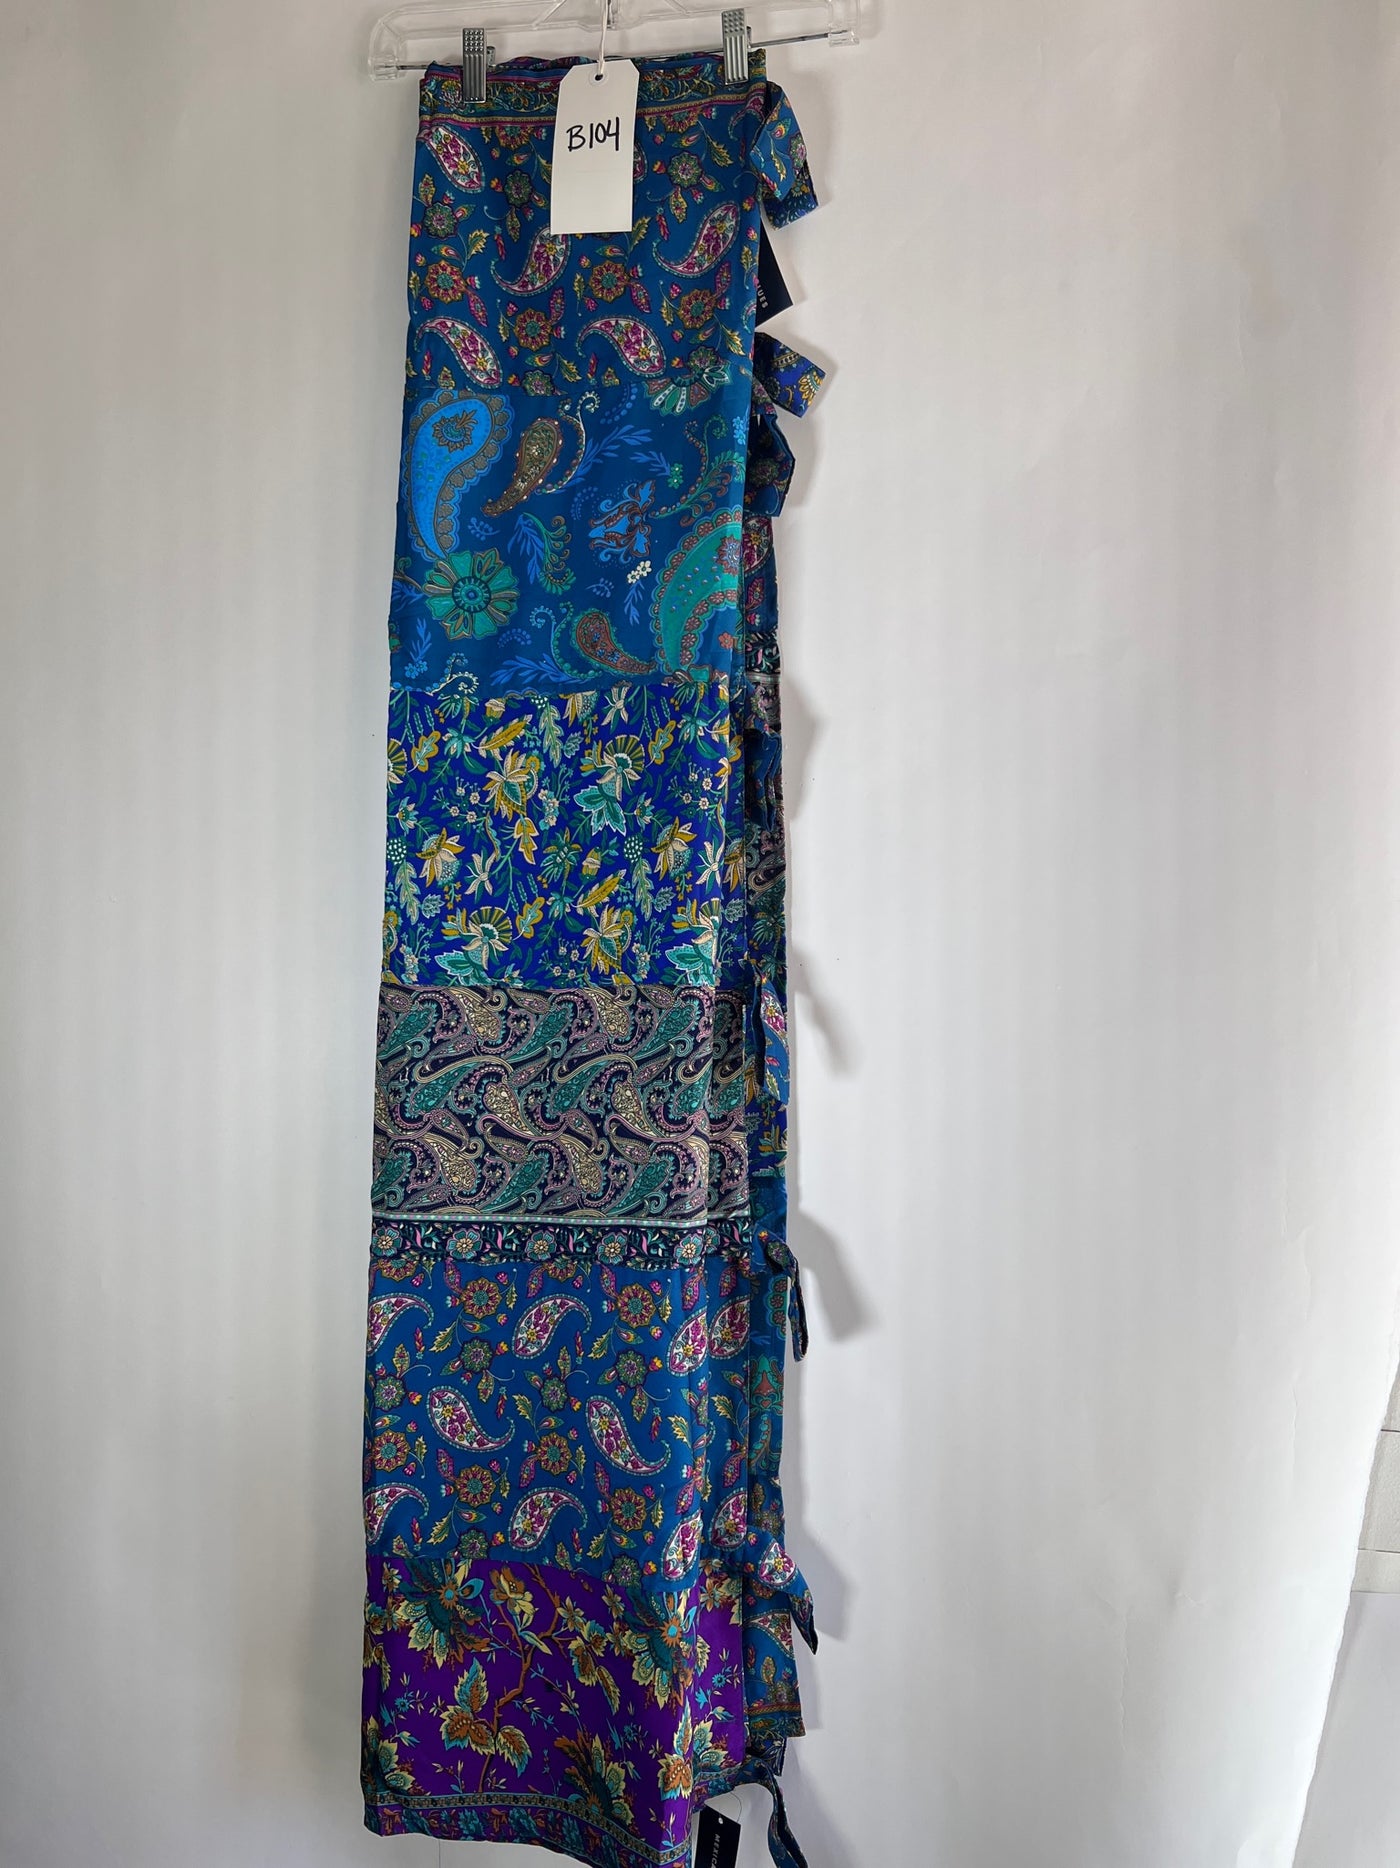 B104 Blue Sari Inspired Curtain Pair